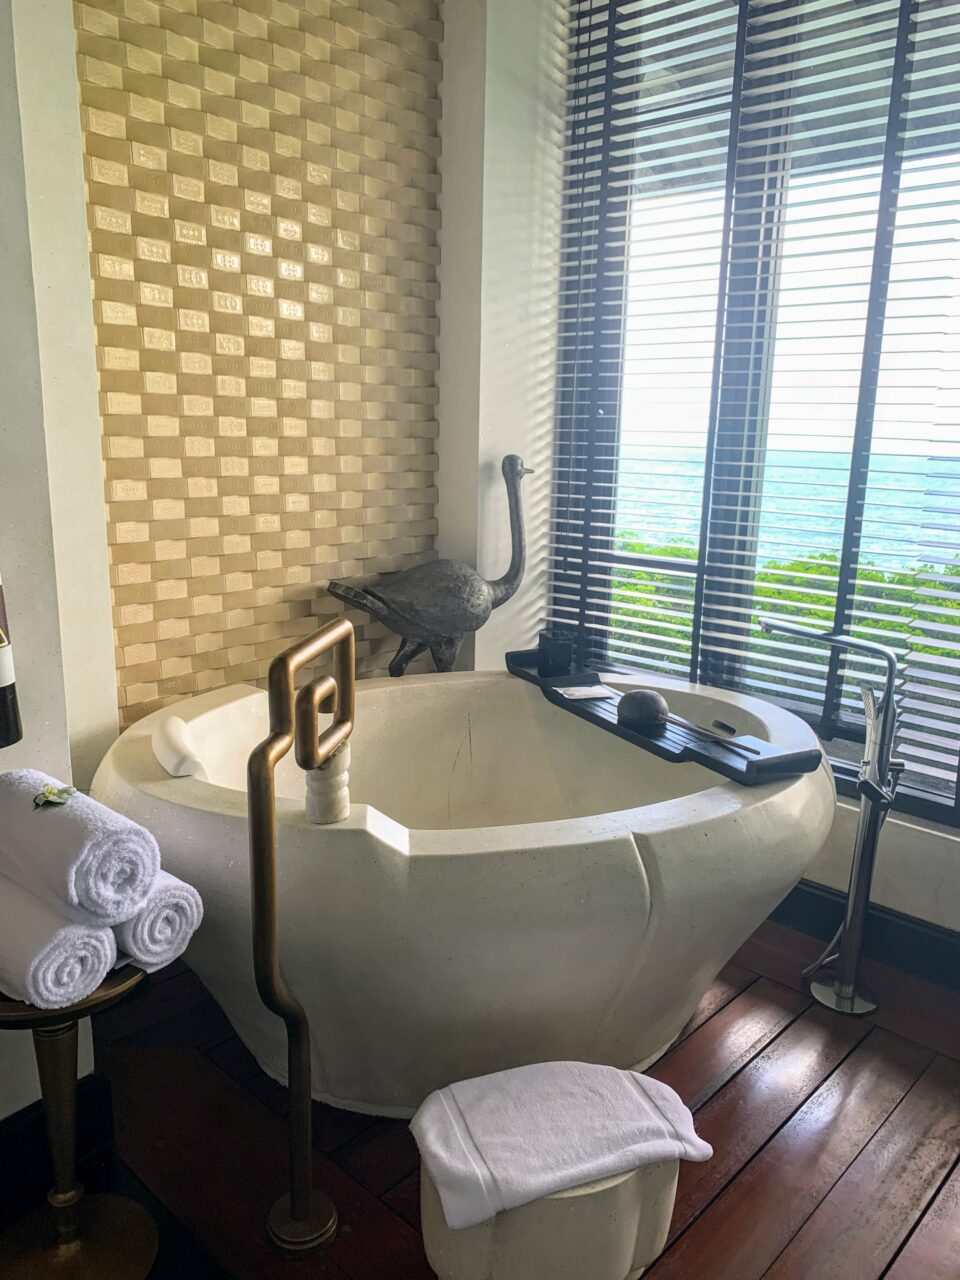 InterContinental Sun Peninsula hotel bathtub